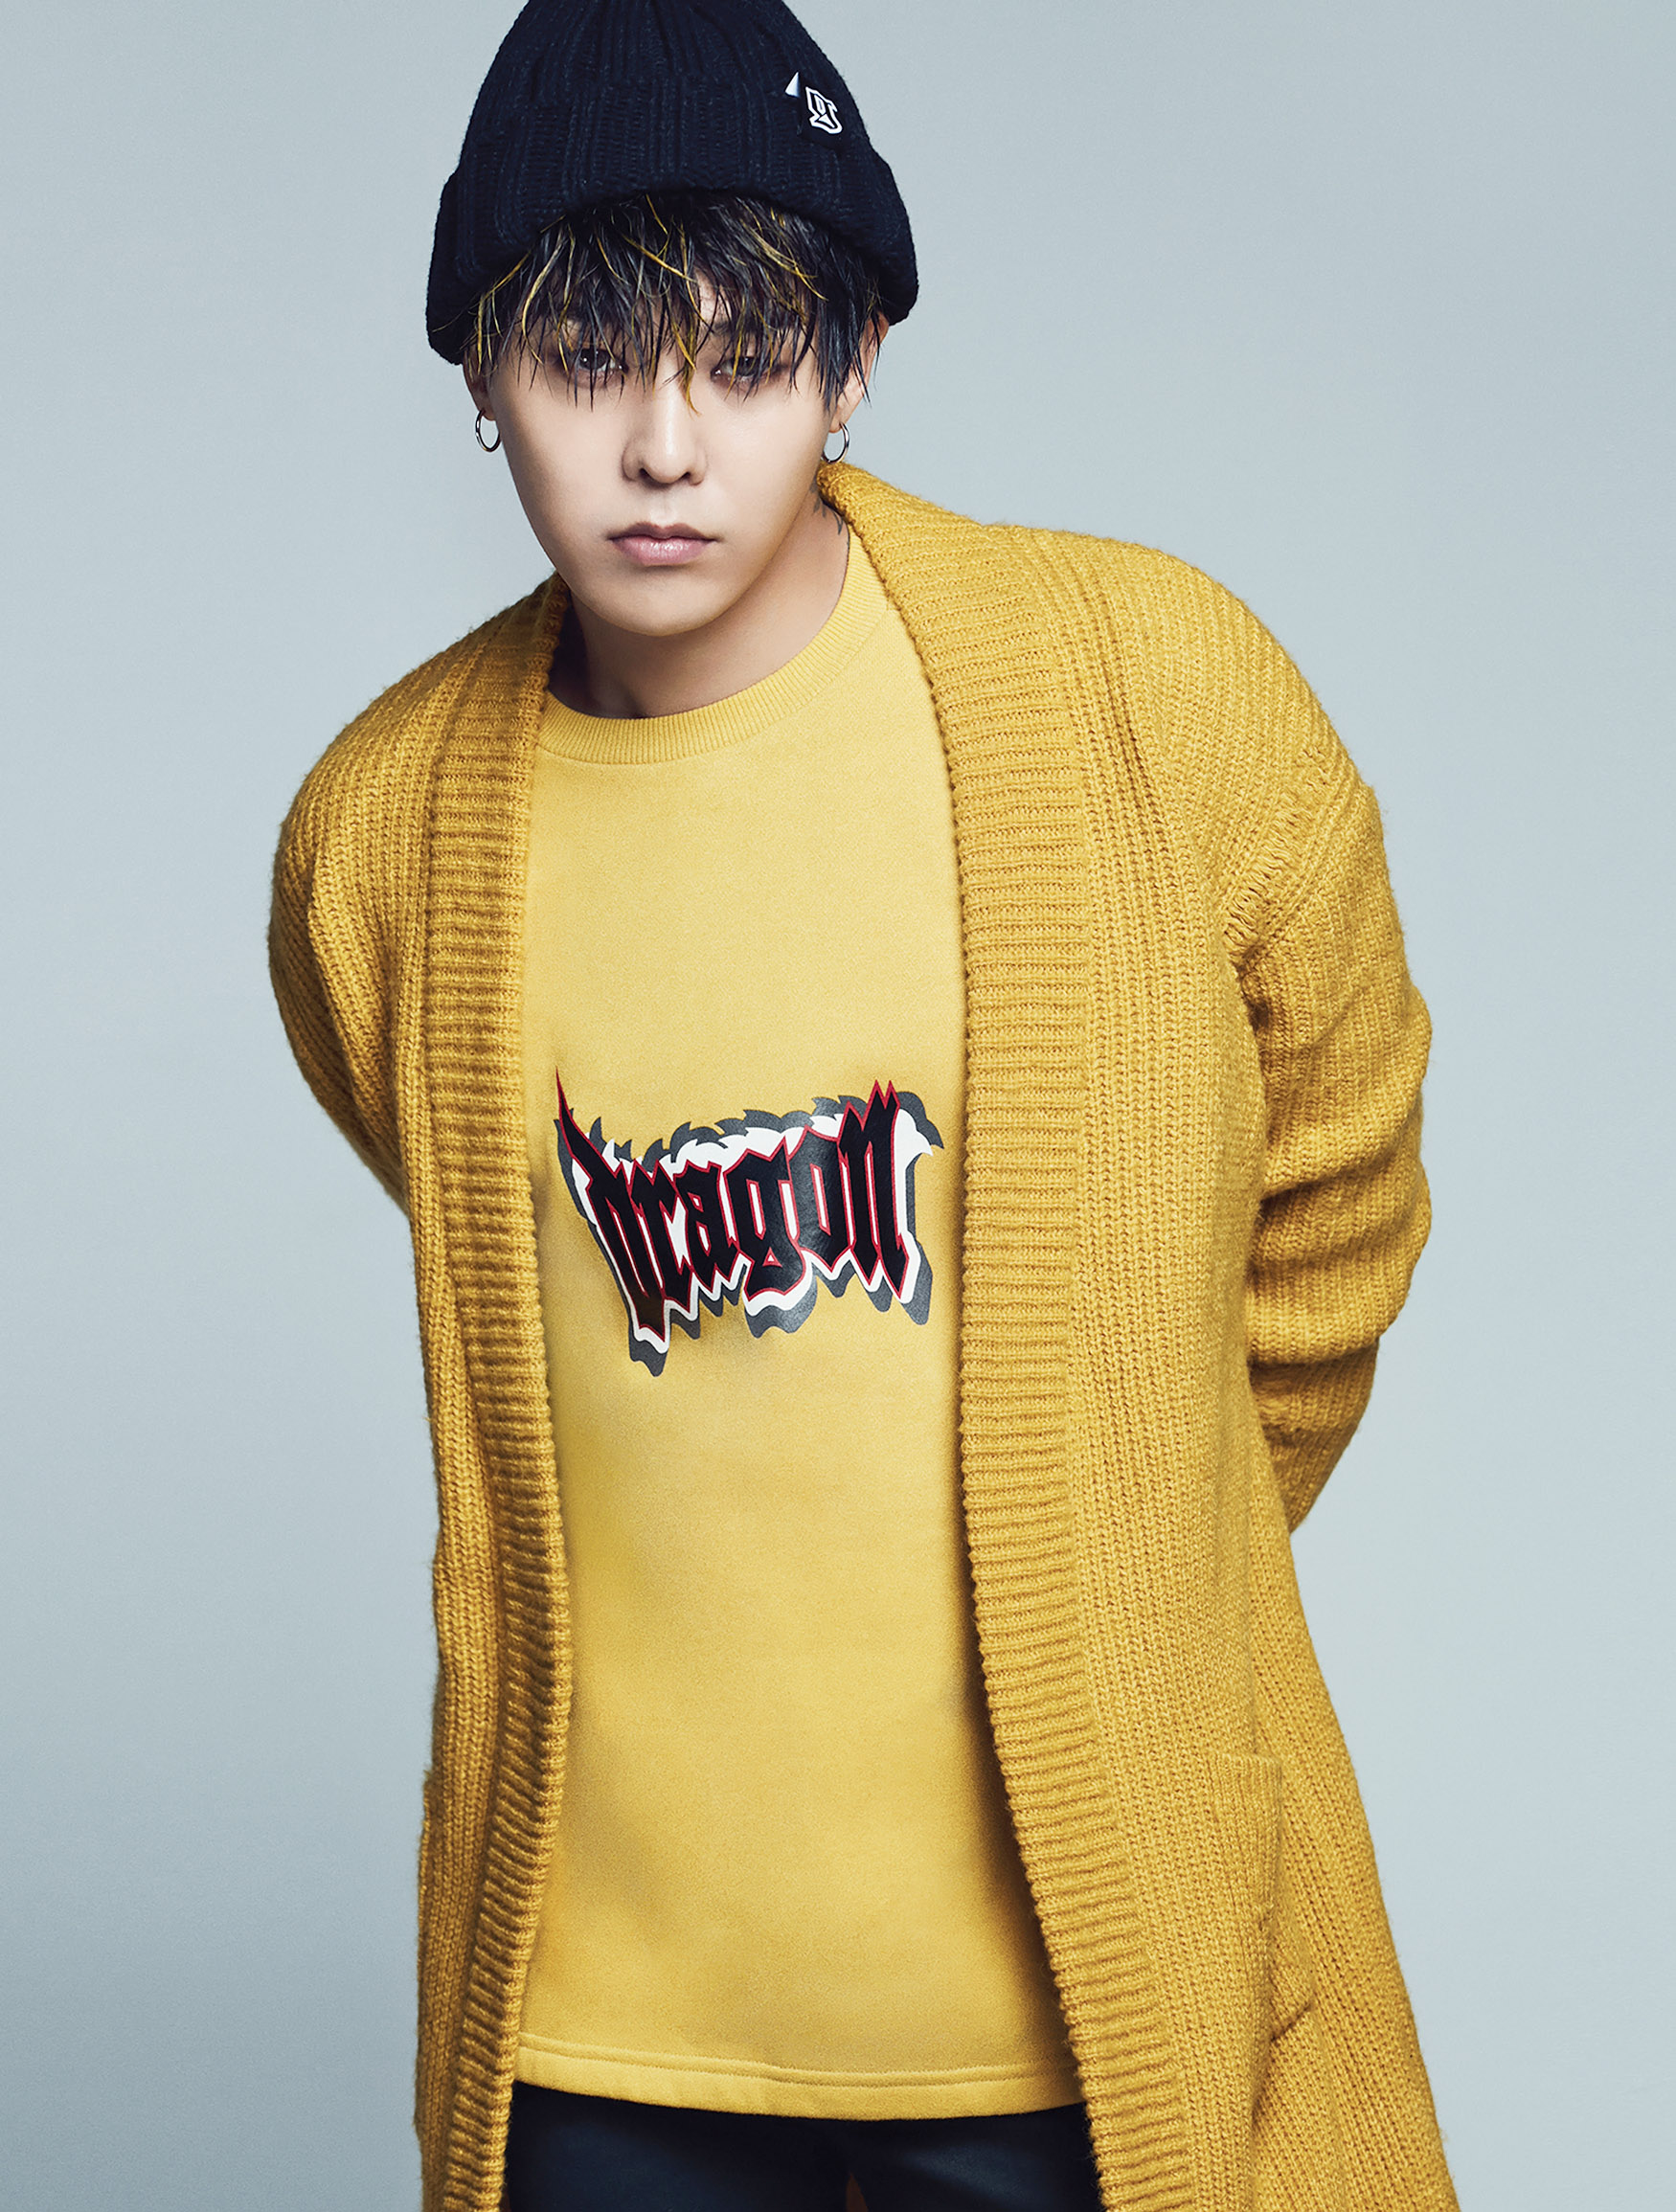 G-Dragon Picture